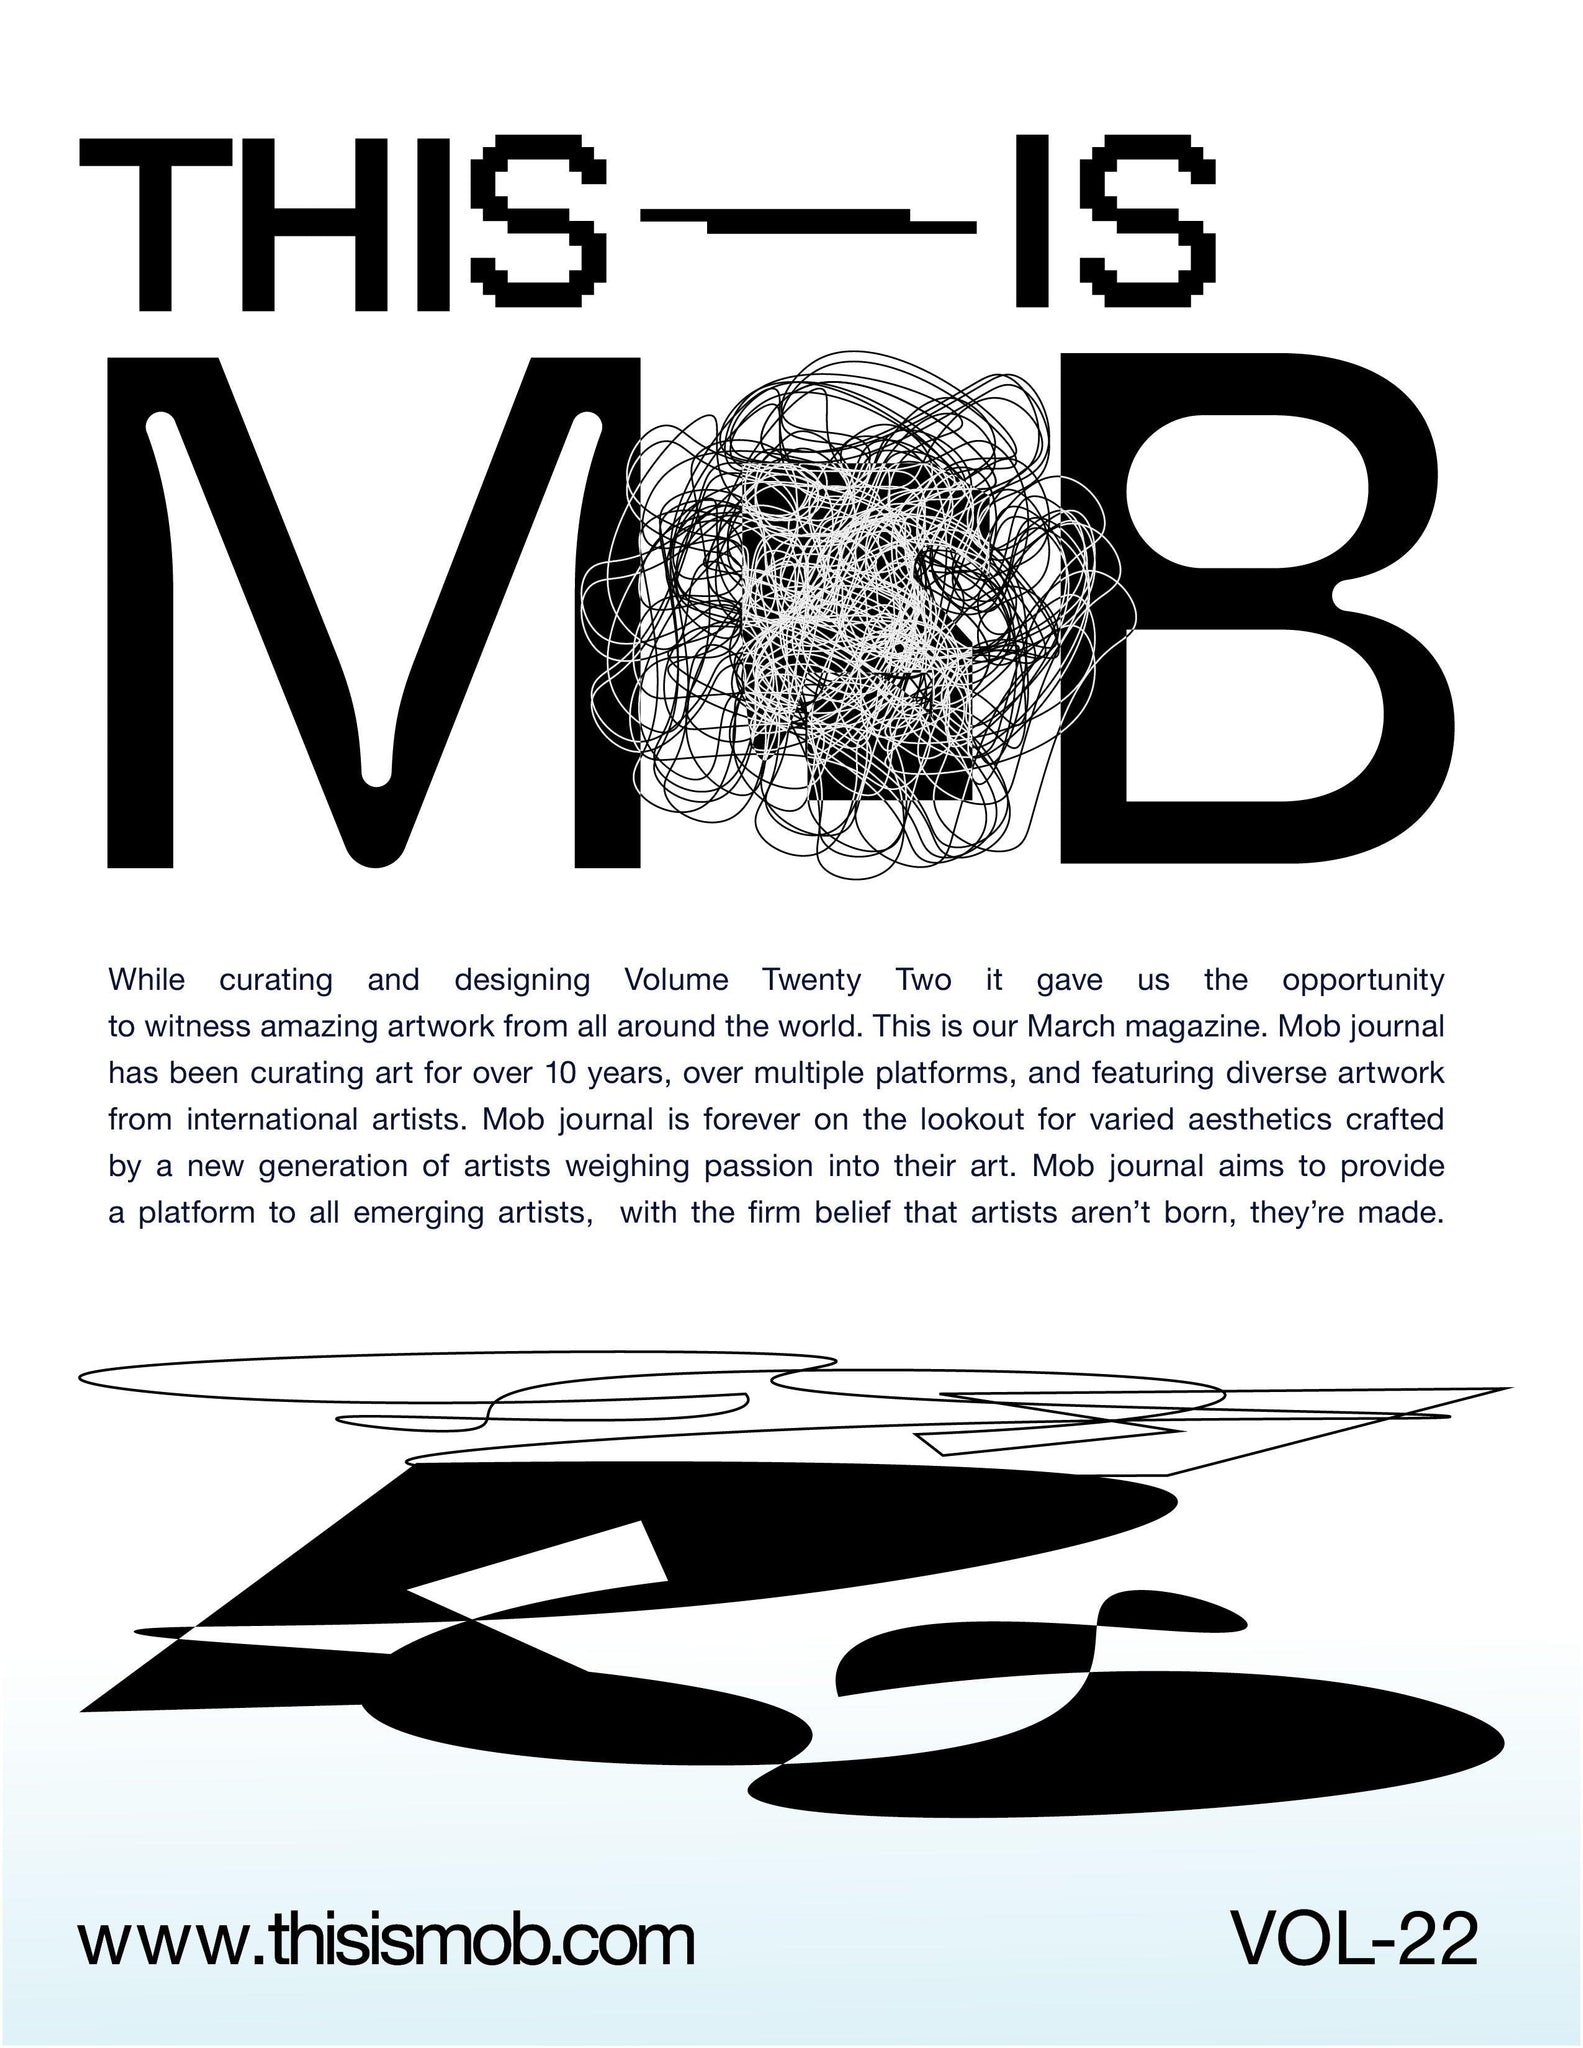 MOB JOURNAL | VOLUME TWENTY TWO | ISSUE #01 - Mob Journal